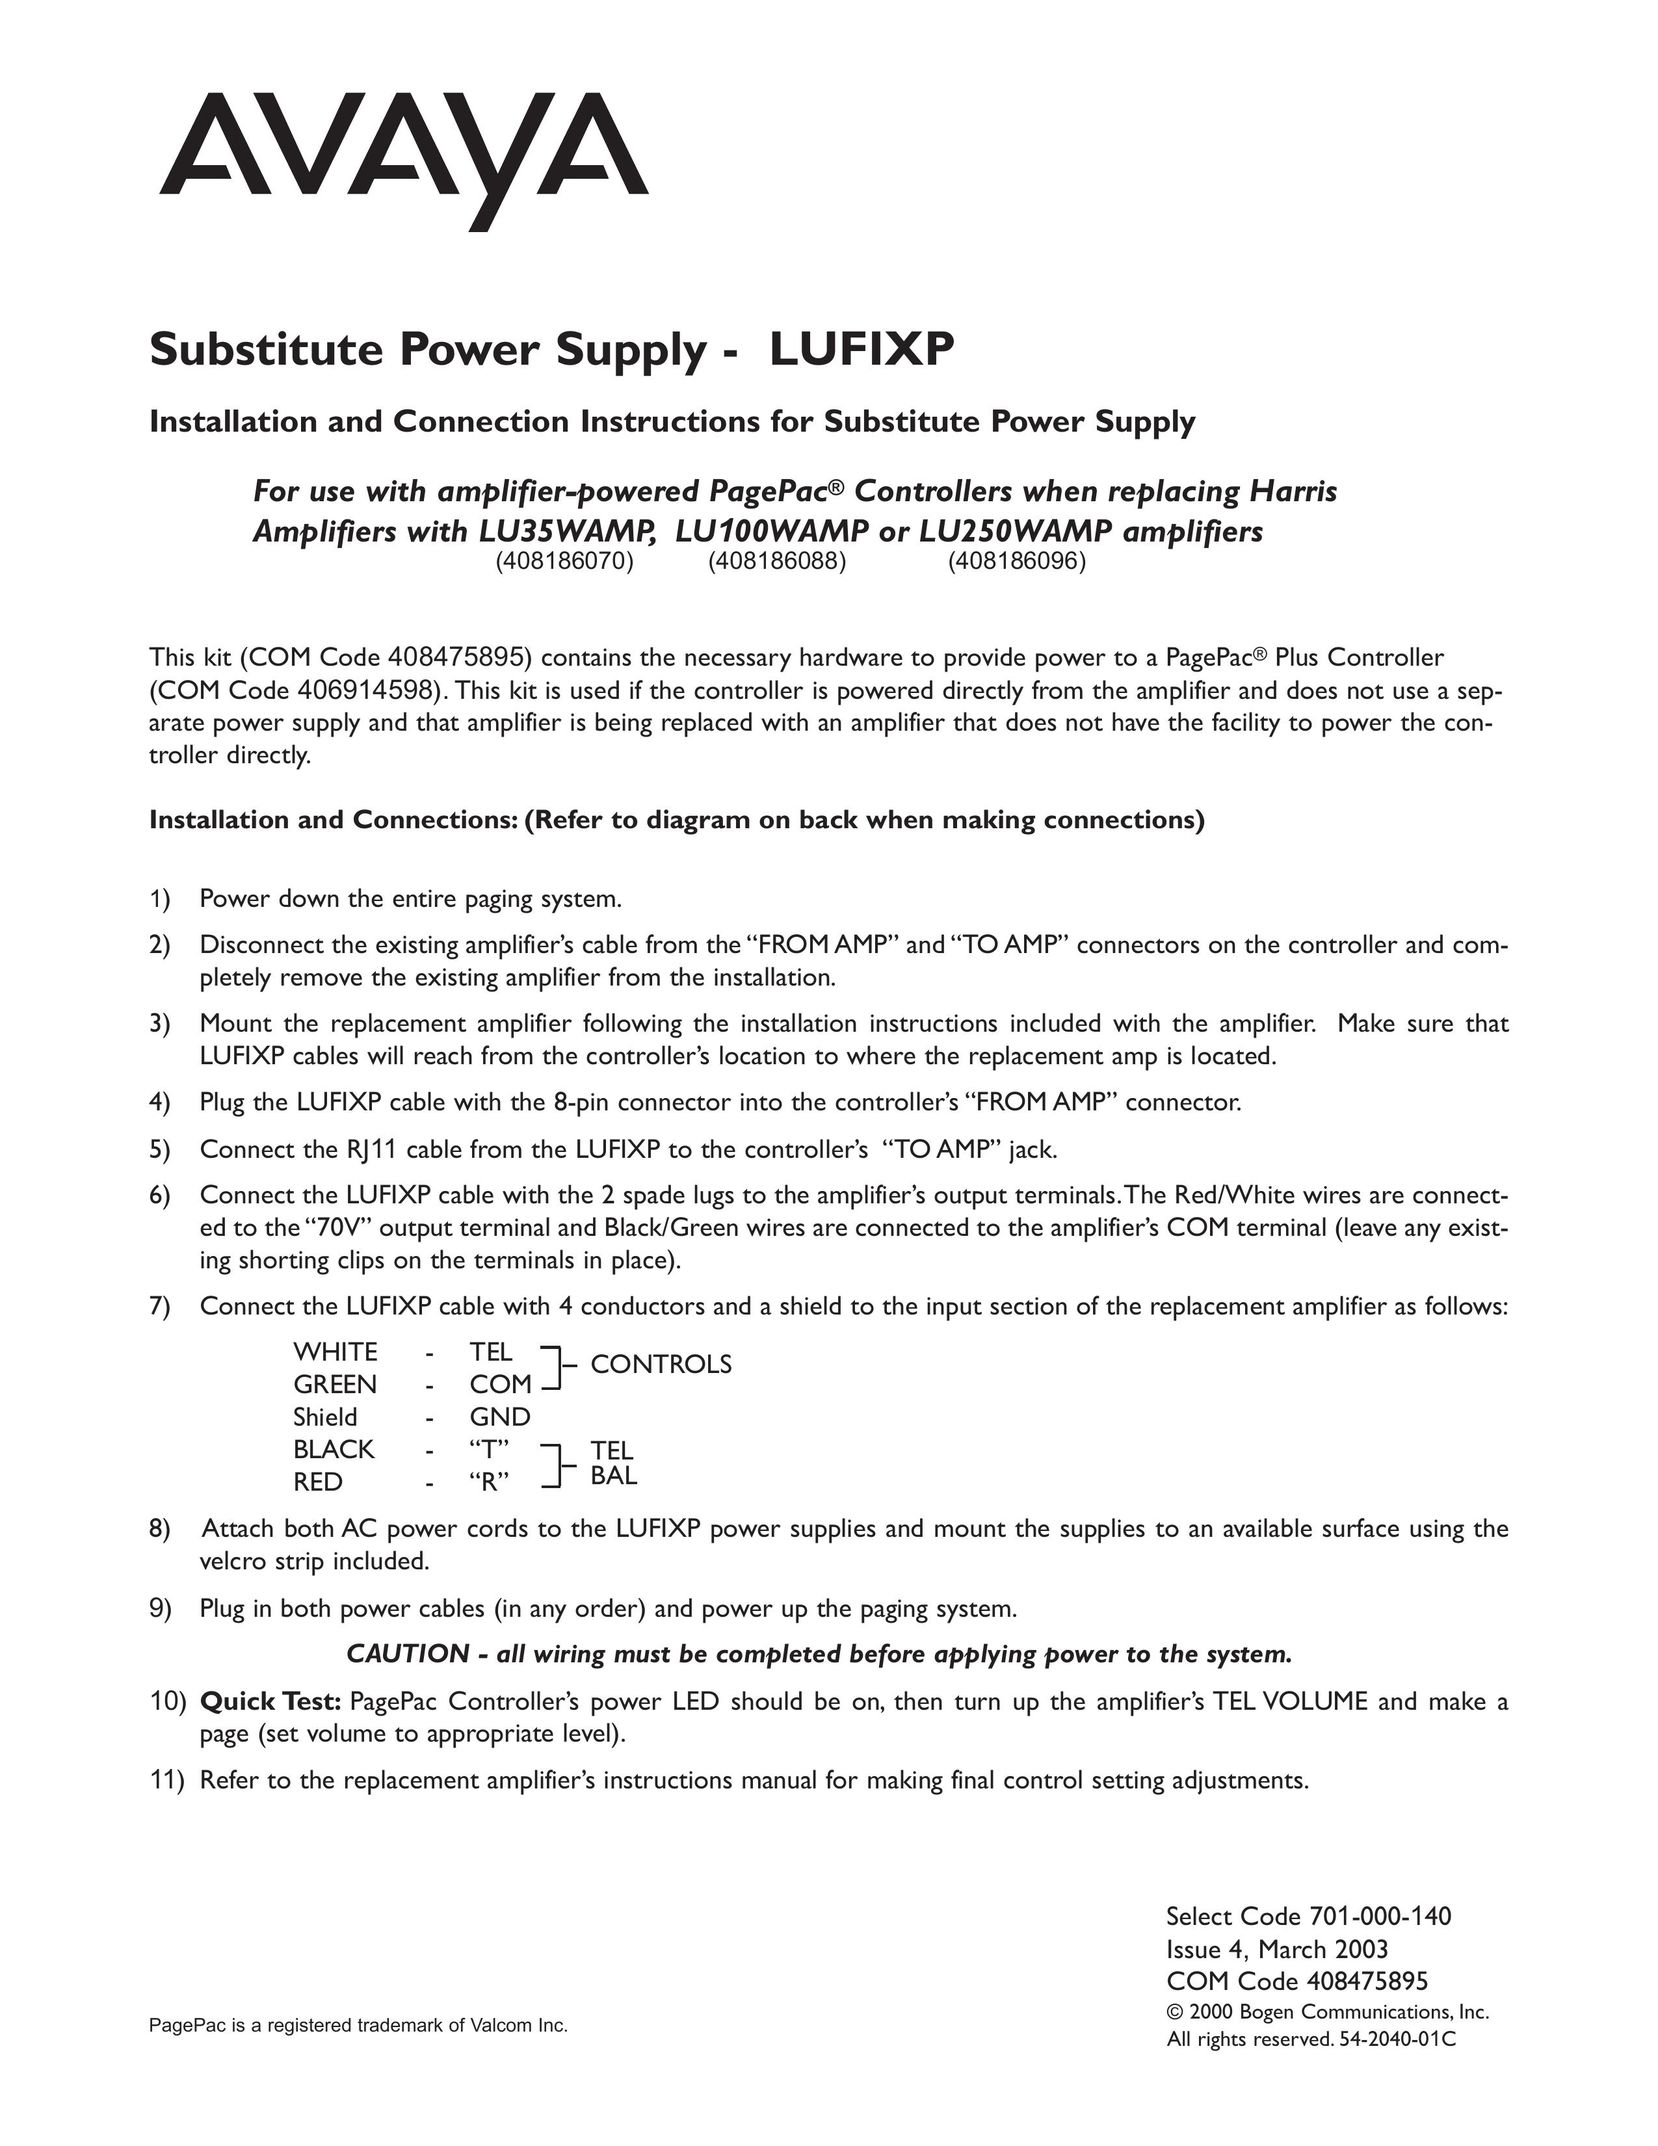 Avaya Substitute Power Supply - LUFIXP Power Supply User Manual